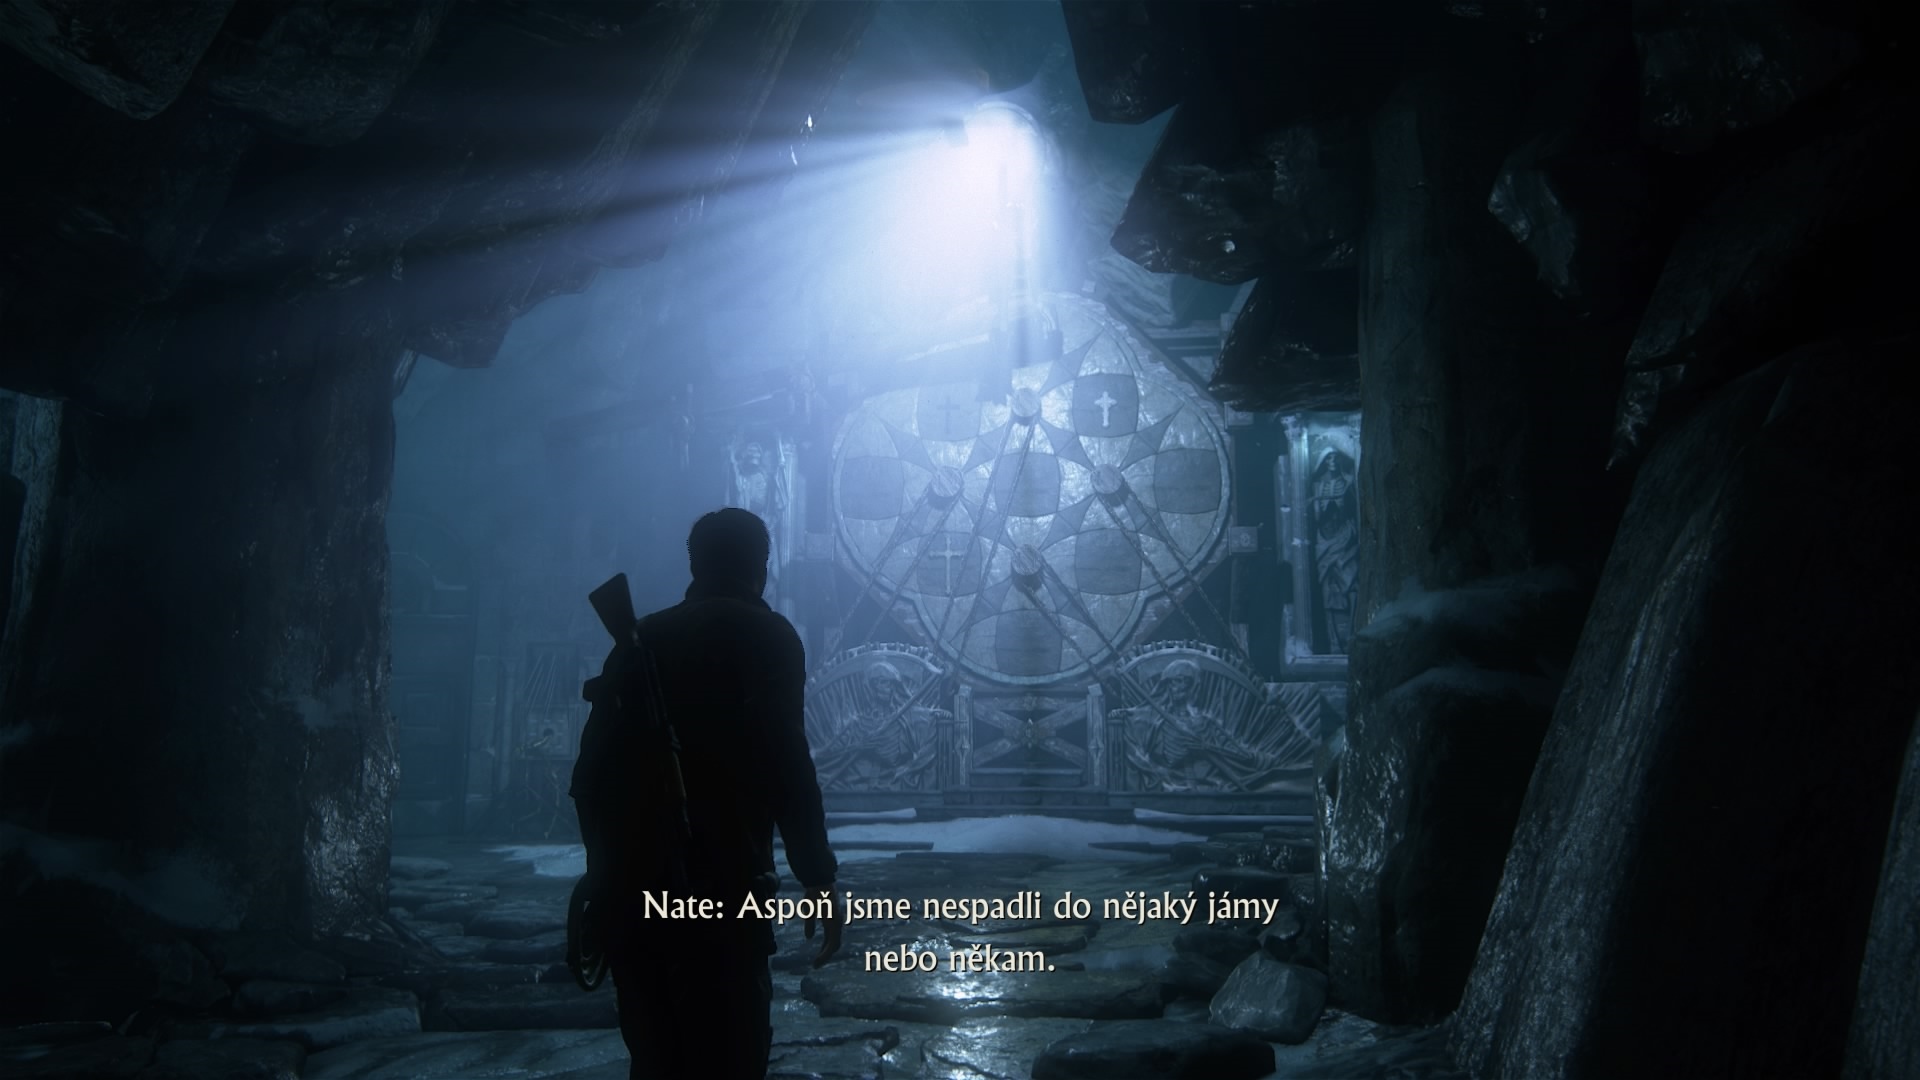 Uncharted 4: A Thief's End Hra neskr ponkne aj naozaj zapamtaten hdanky.